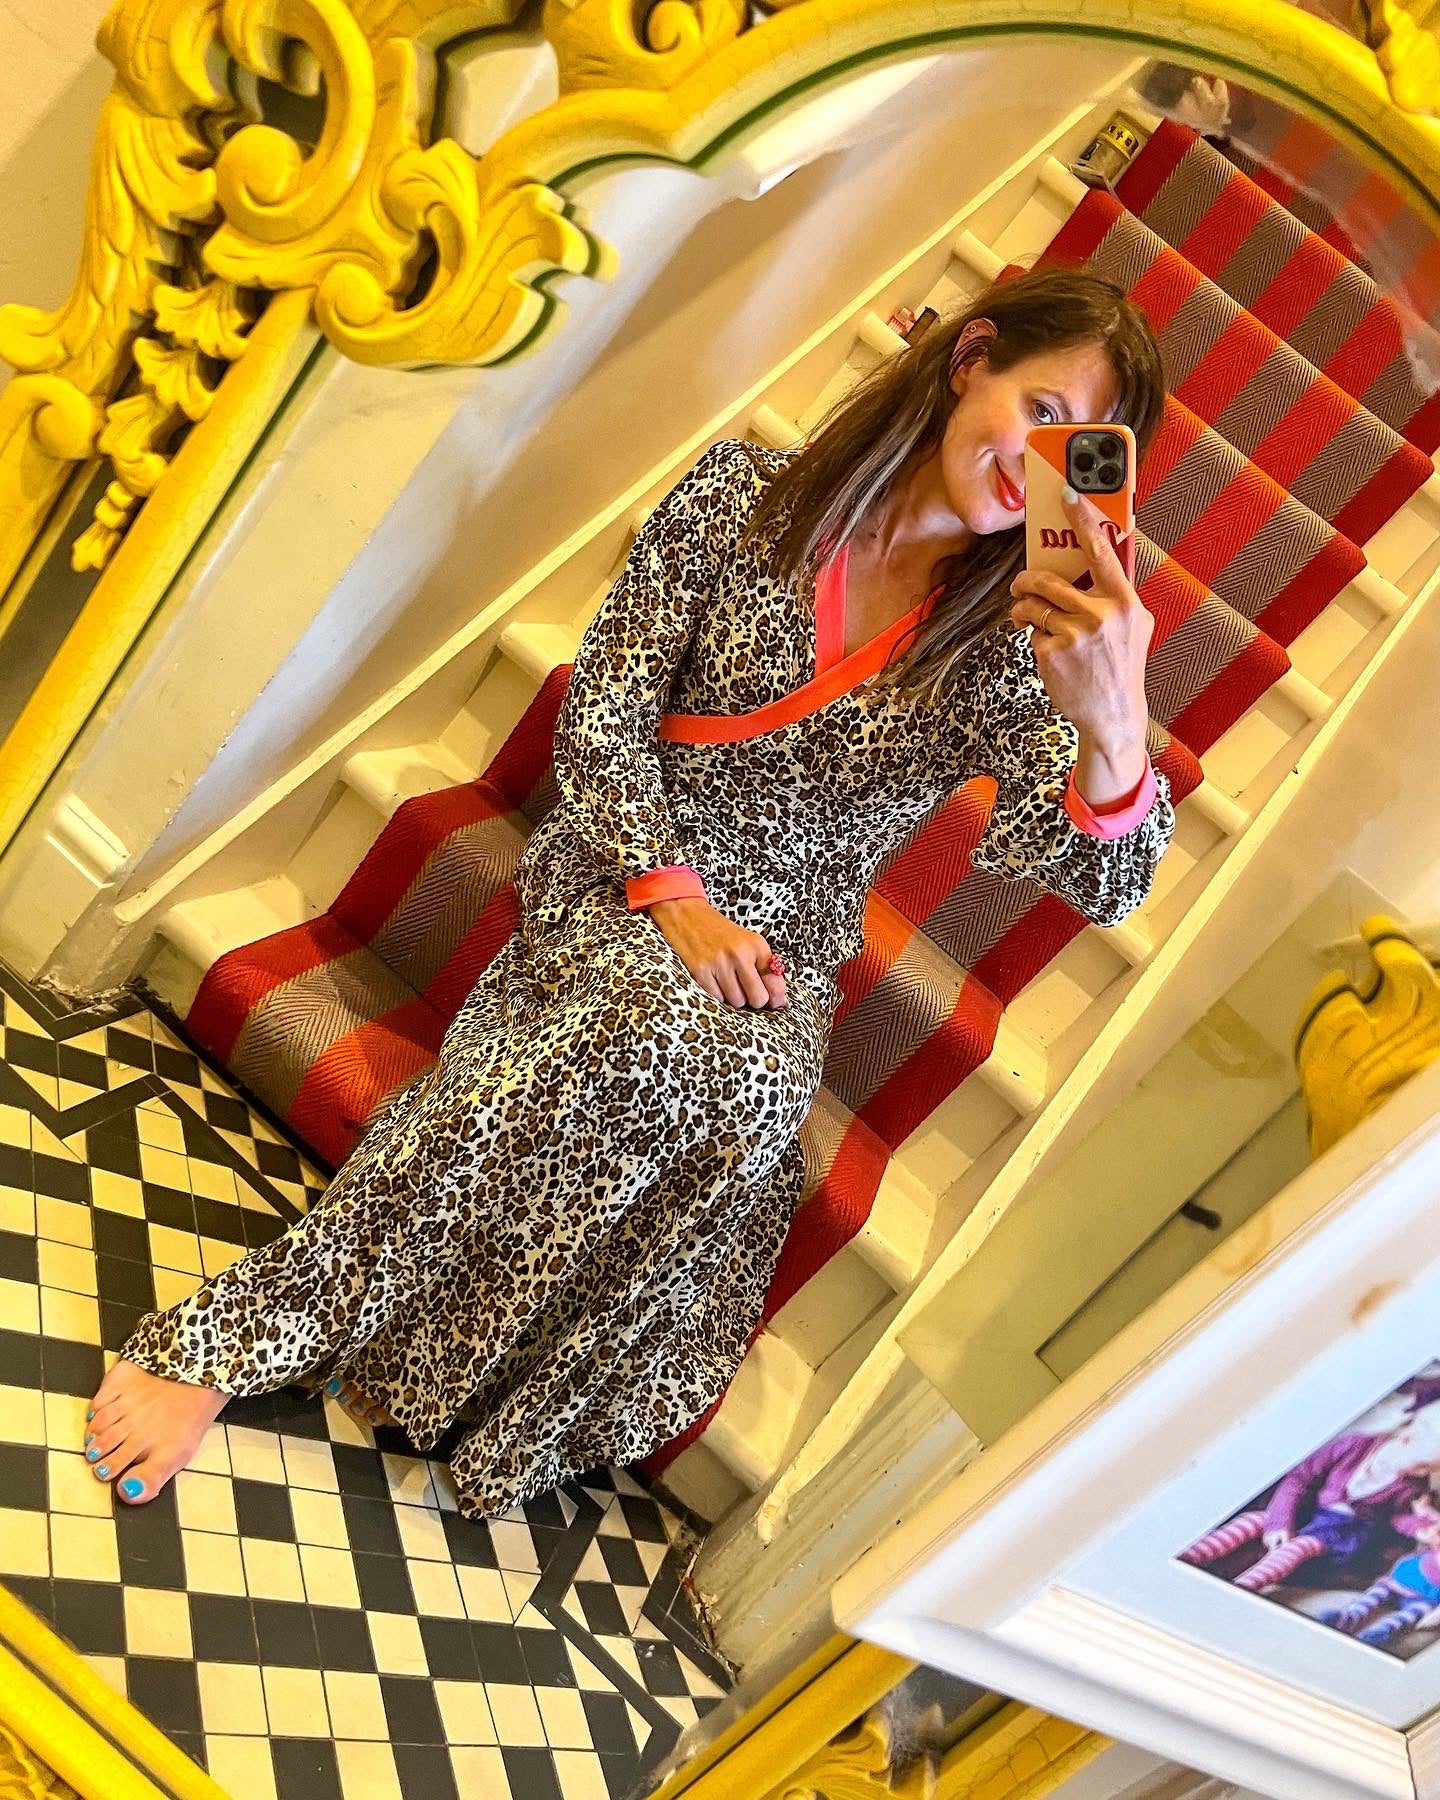 The ‘Leopard Pop’ dress